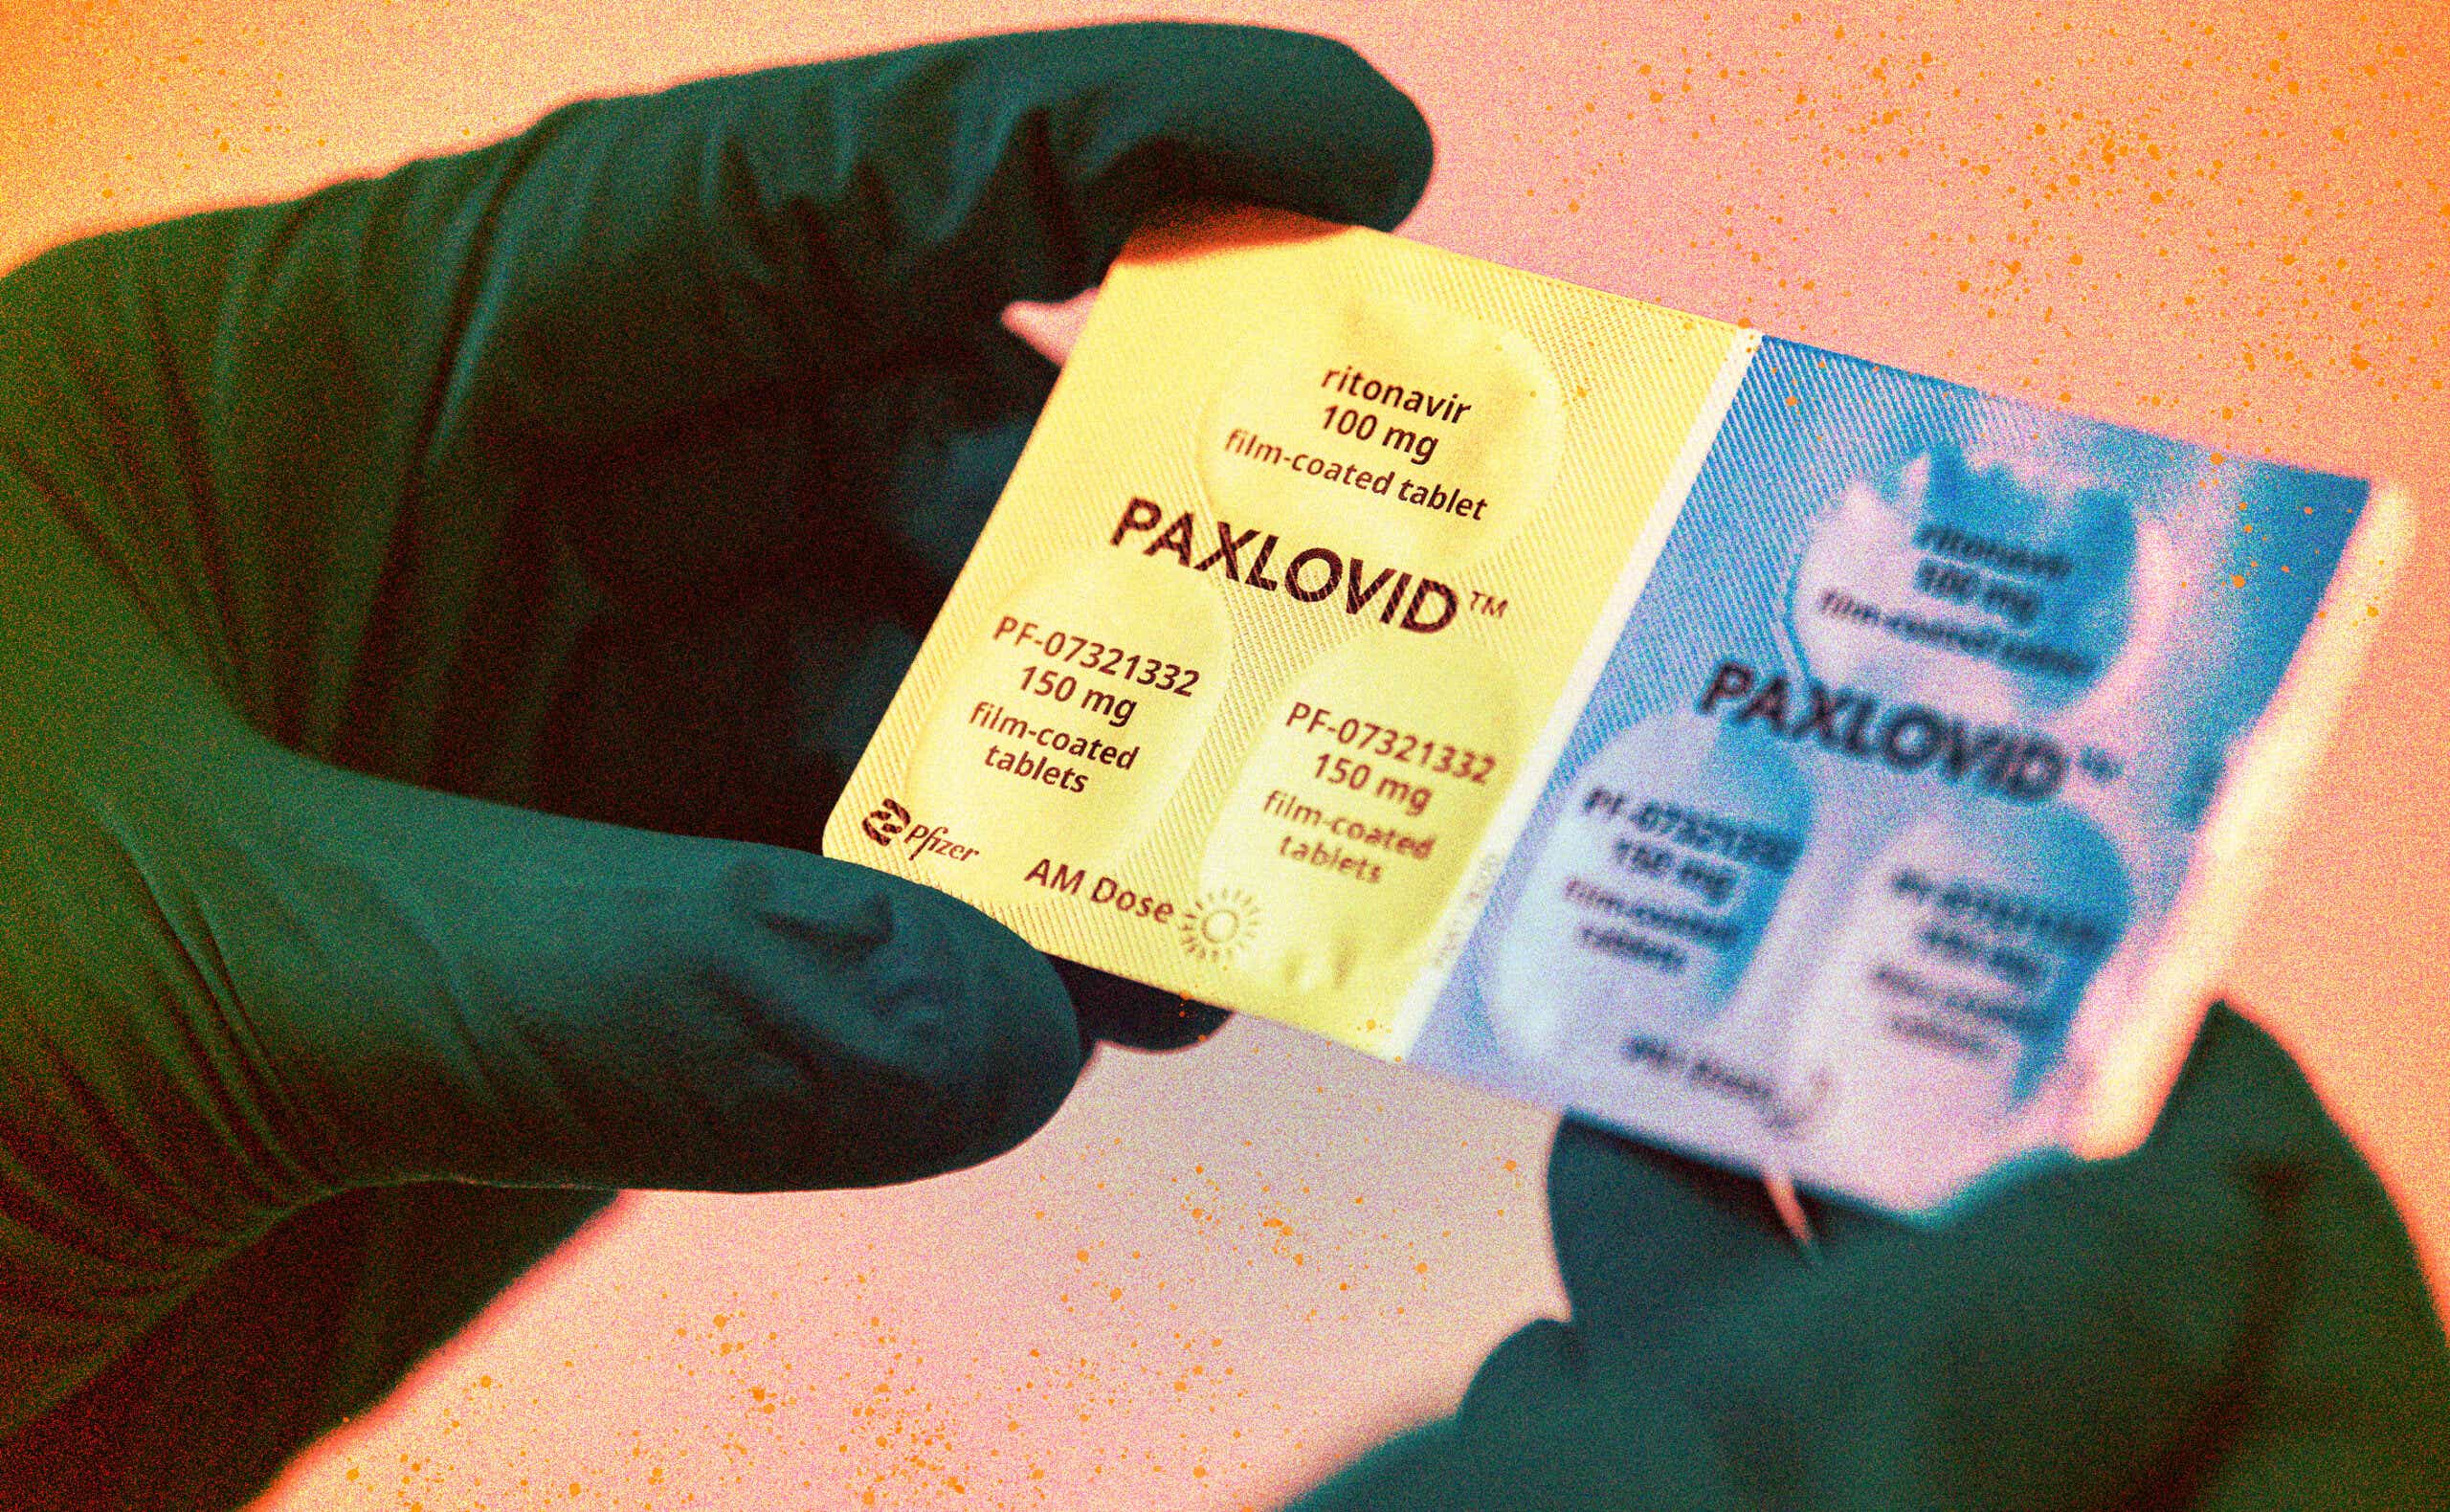 person wearing gloves holding paxlovid pills